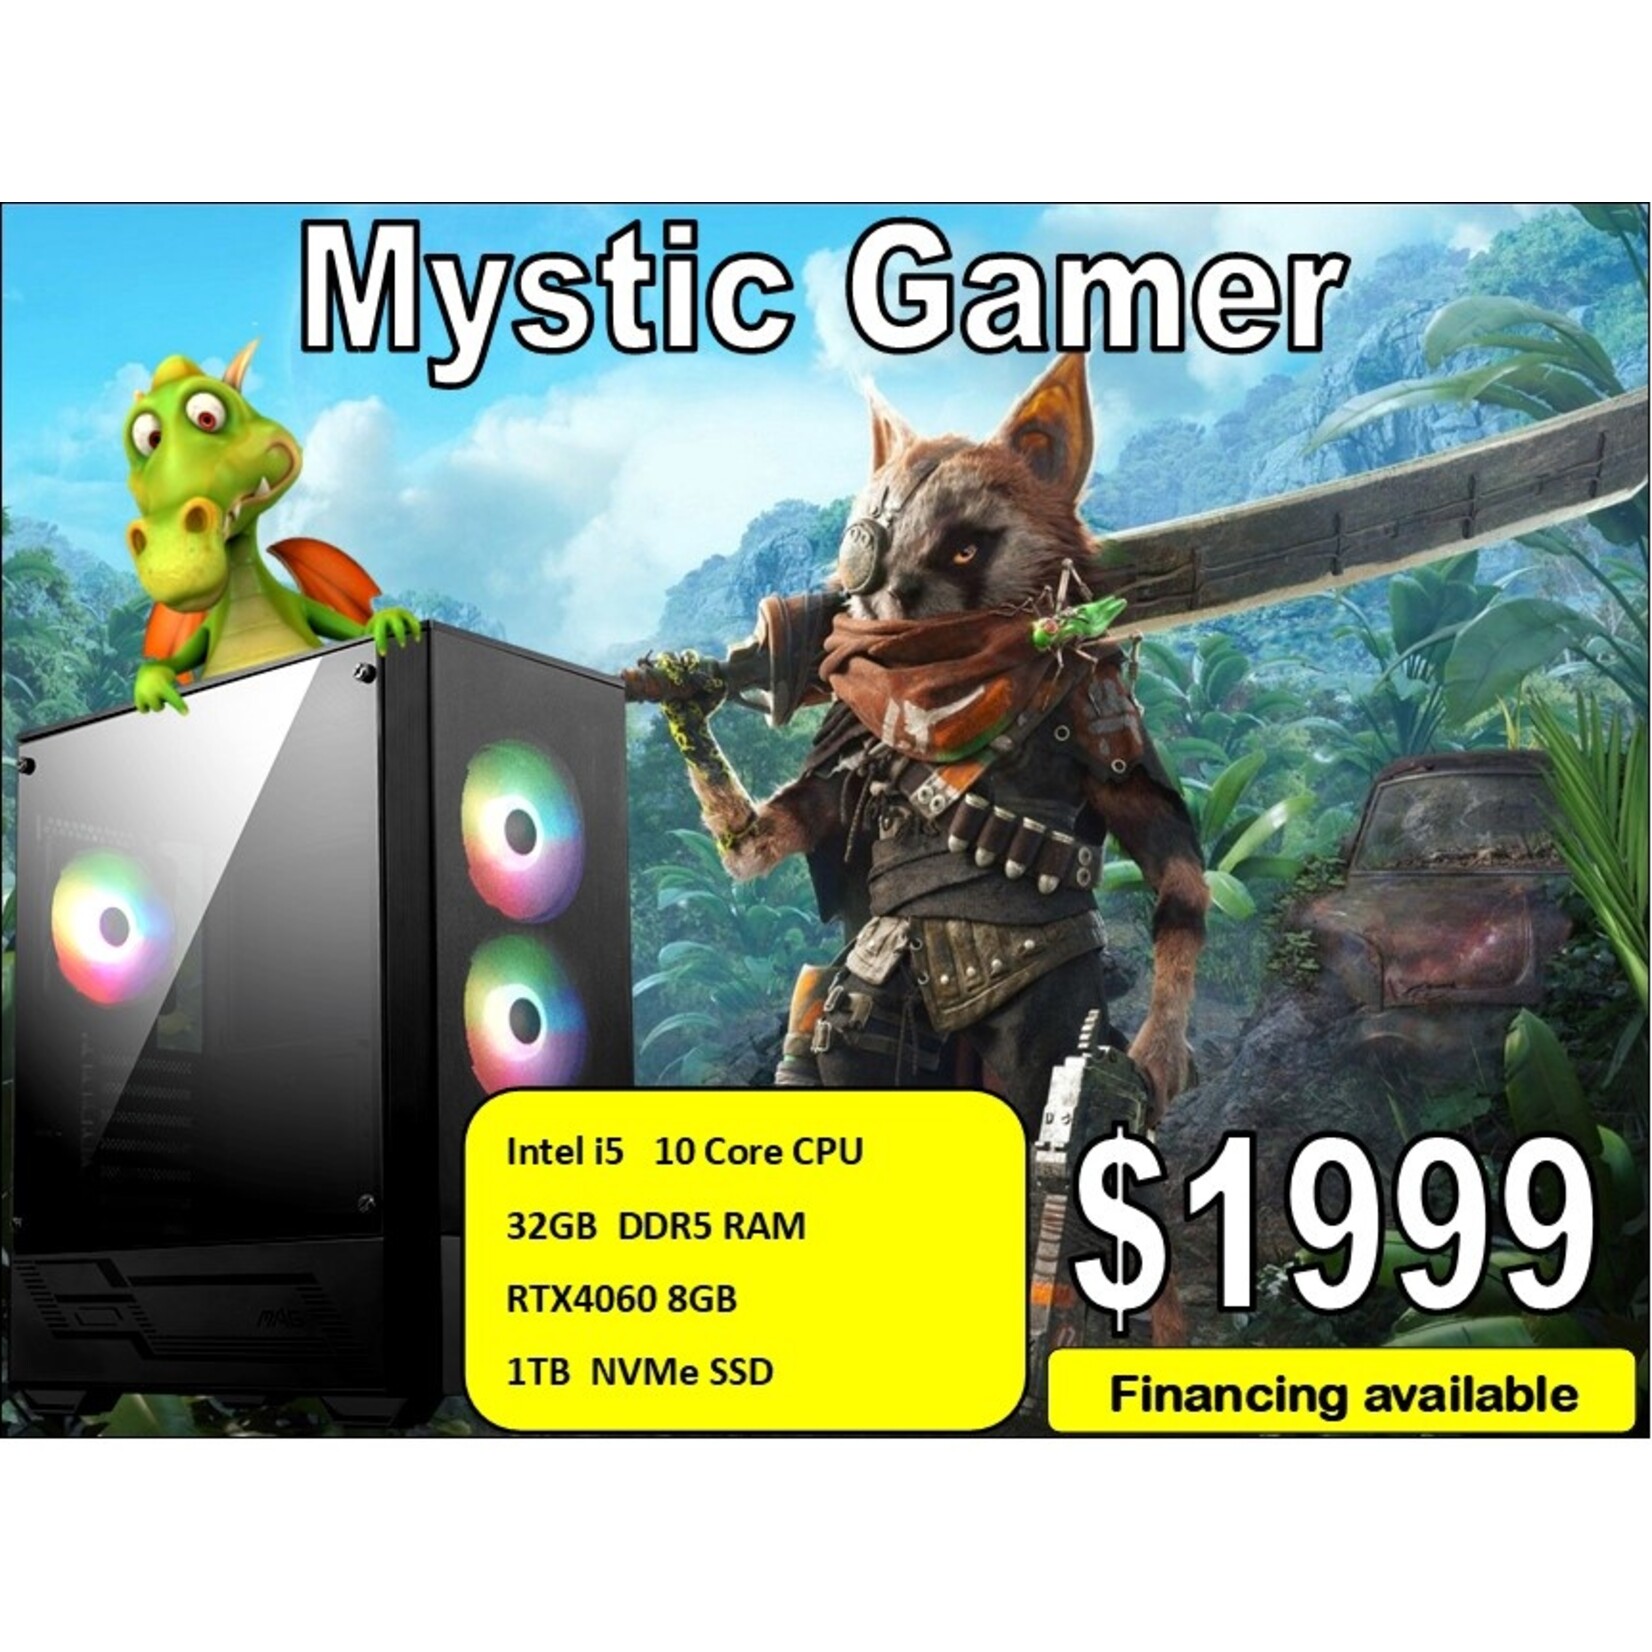 Mystic Gamer